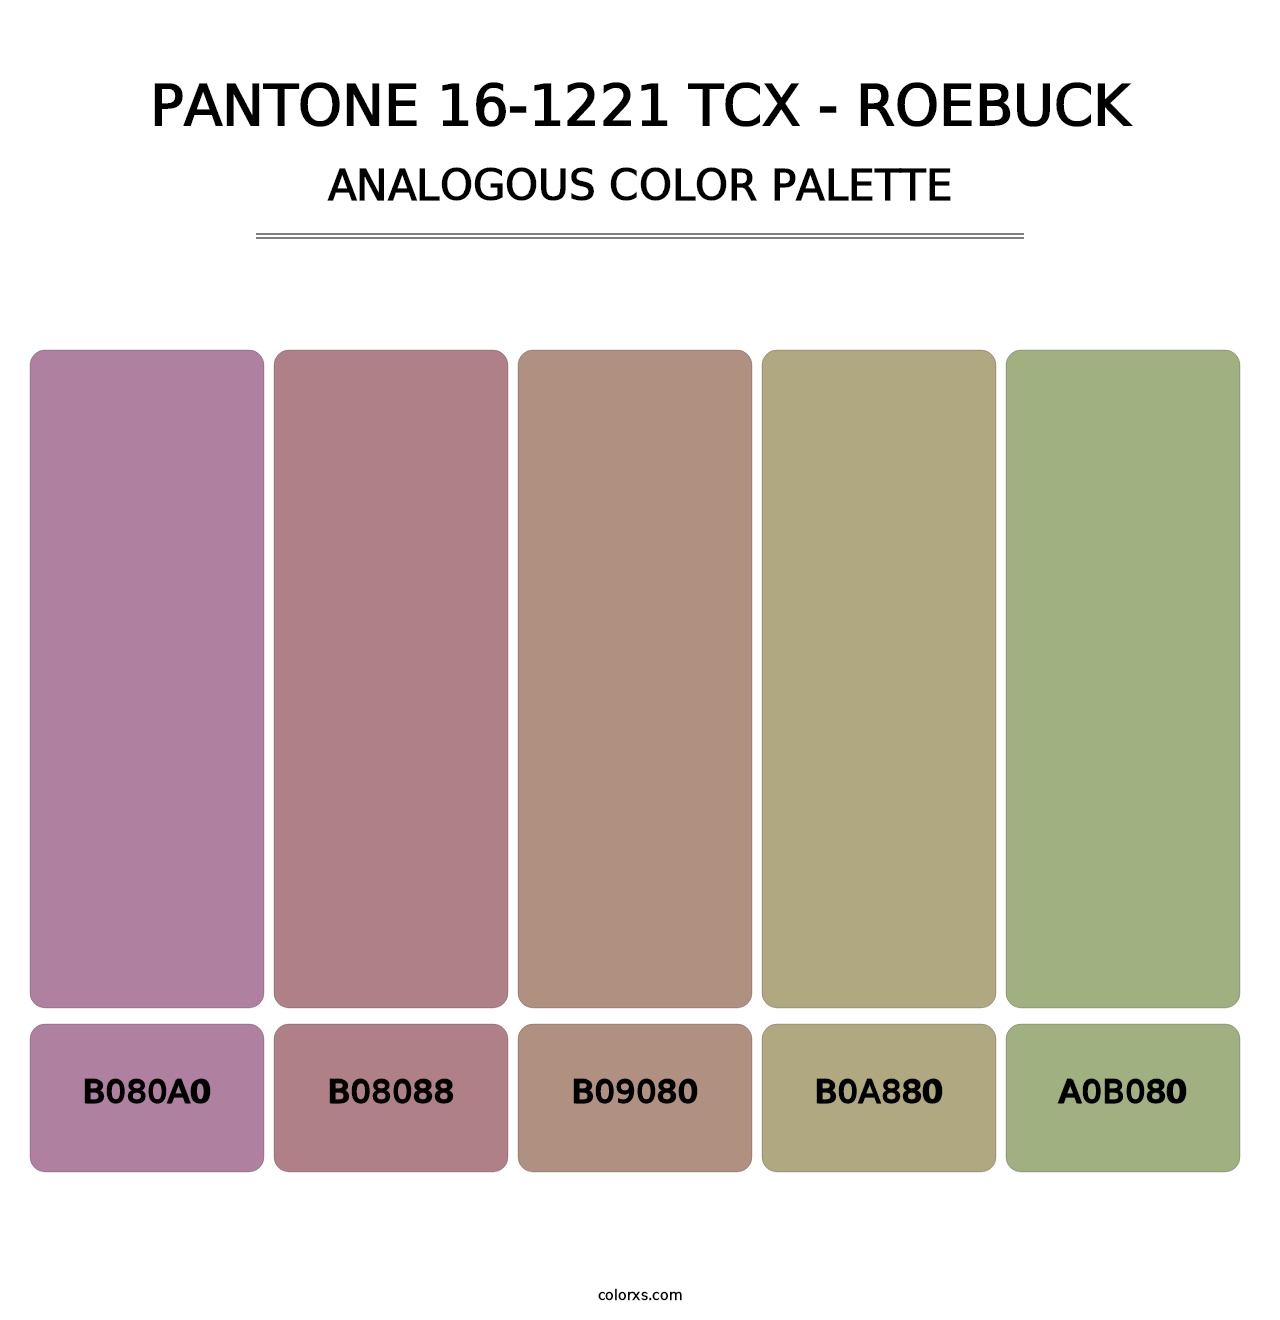 PANTONE 16-1221 TCX - Roebuck - Analogous Color Palette